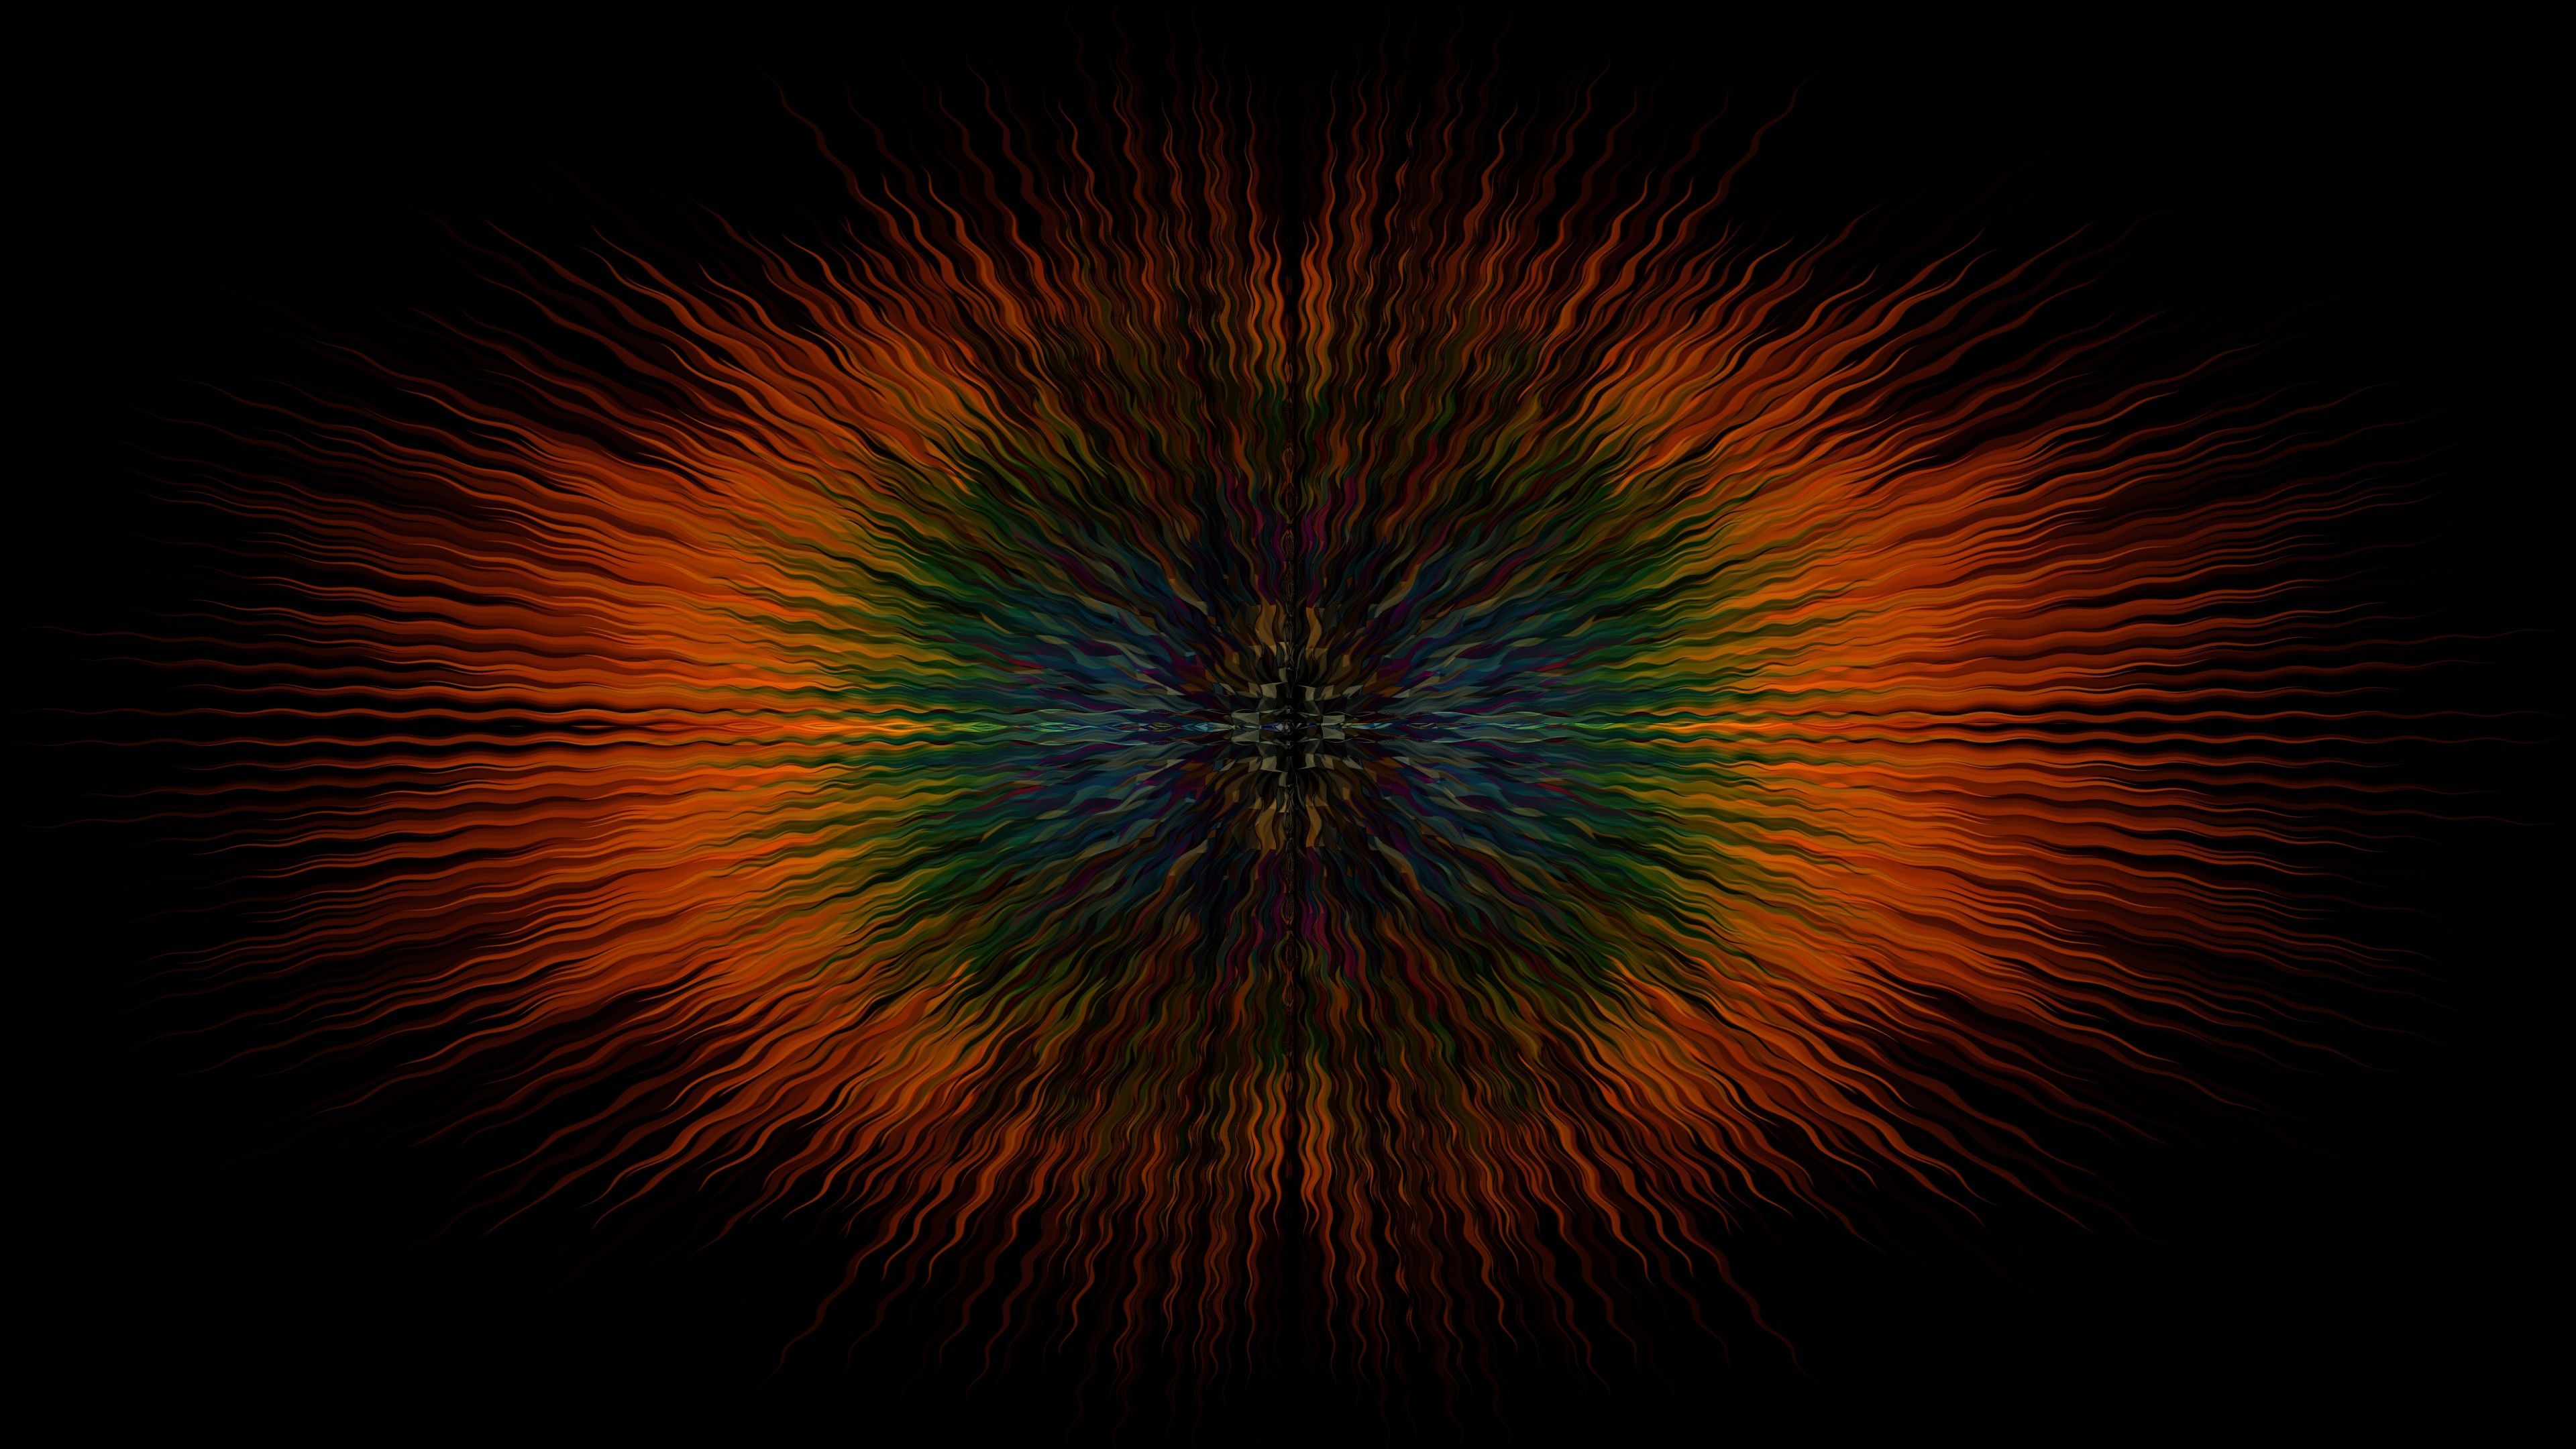 #Illusion, #Symmetrical, K, #Fireworks. Abstract